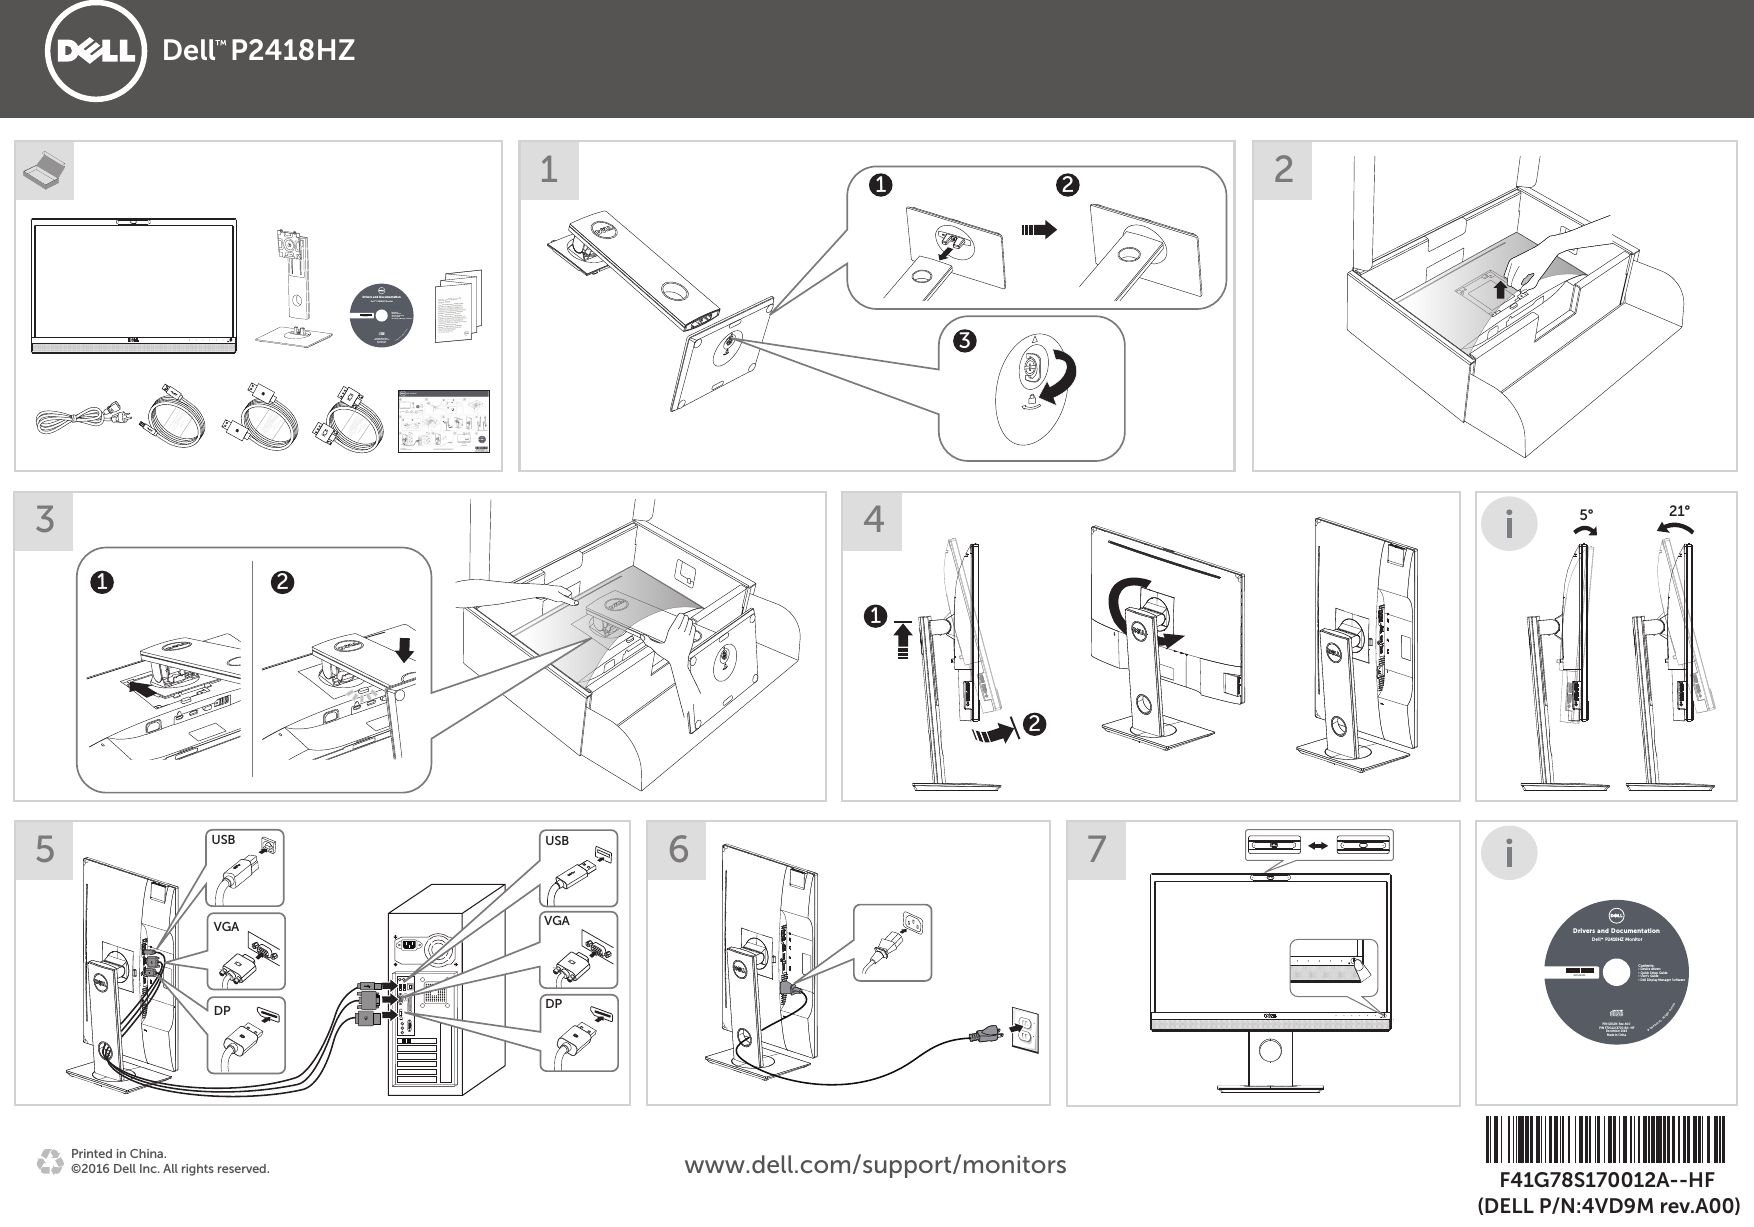 Dell p2418hz monitor Quick Setup Guide User Manual En us